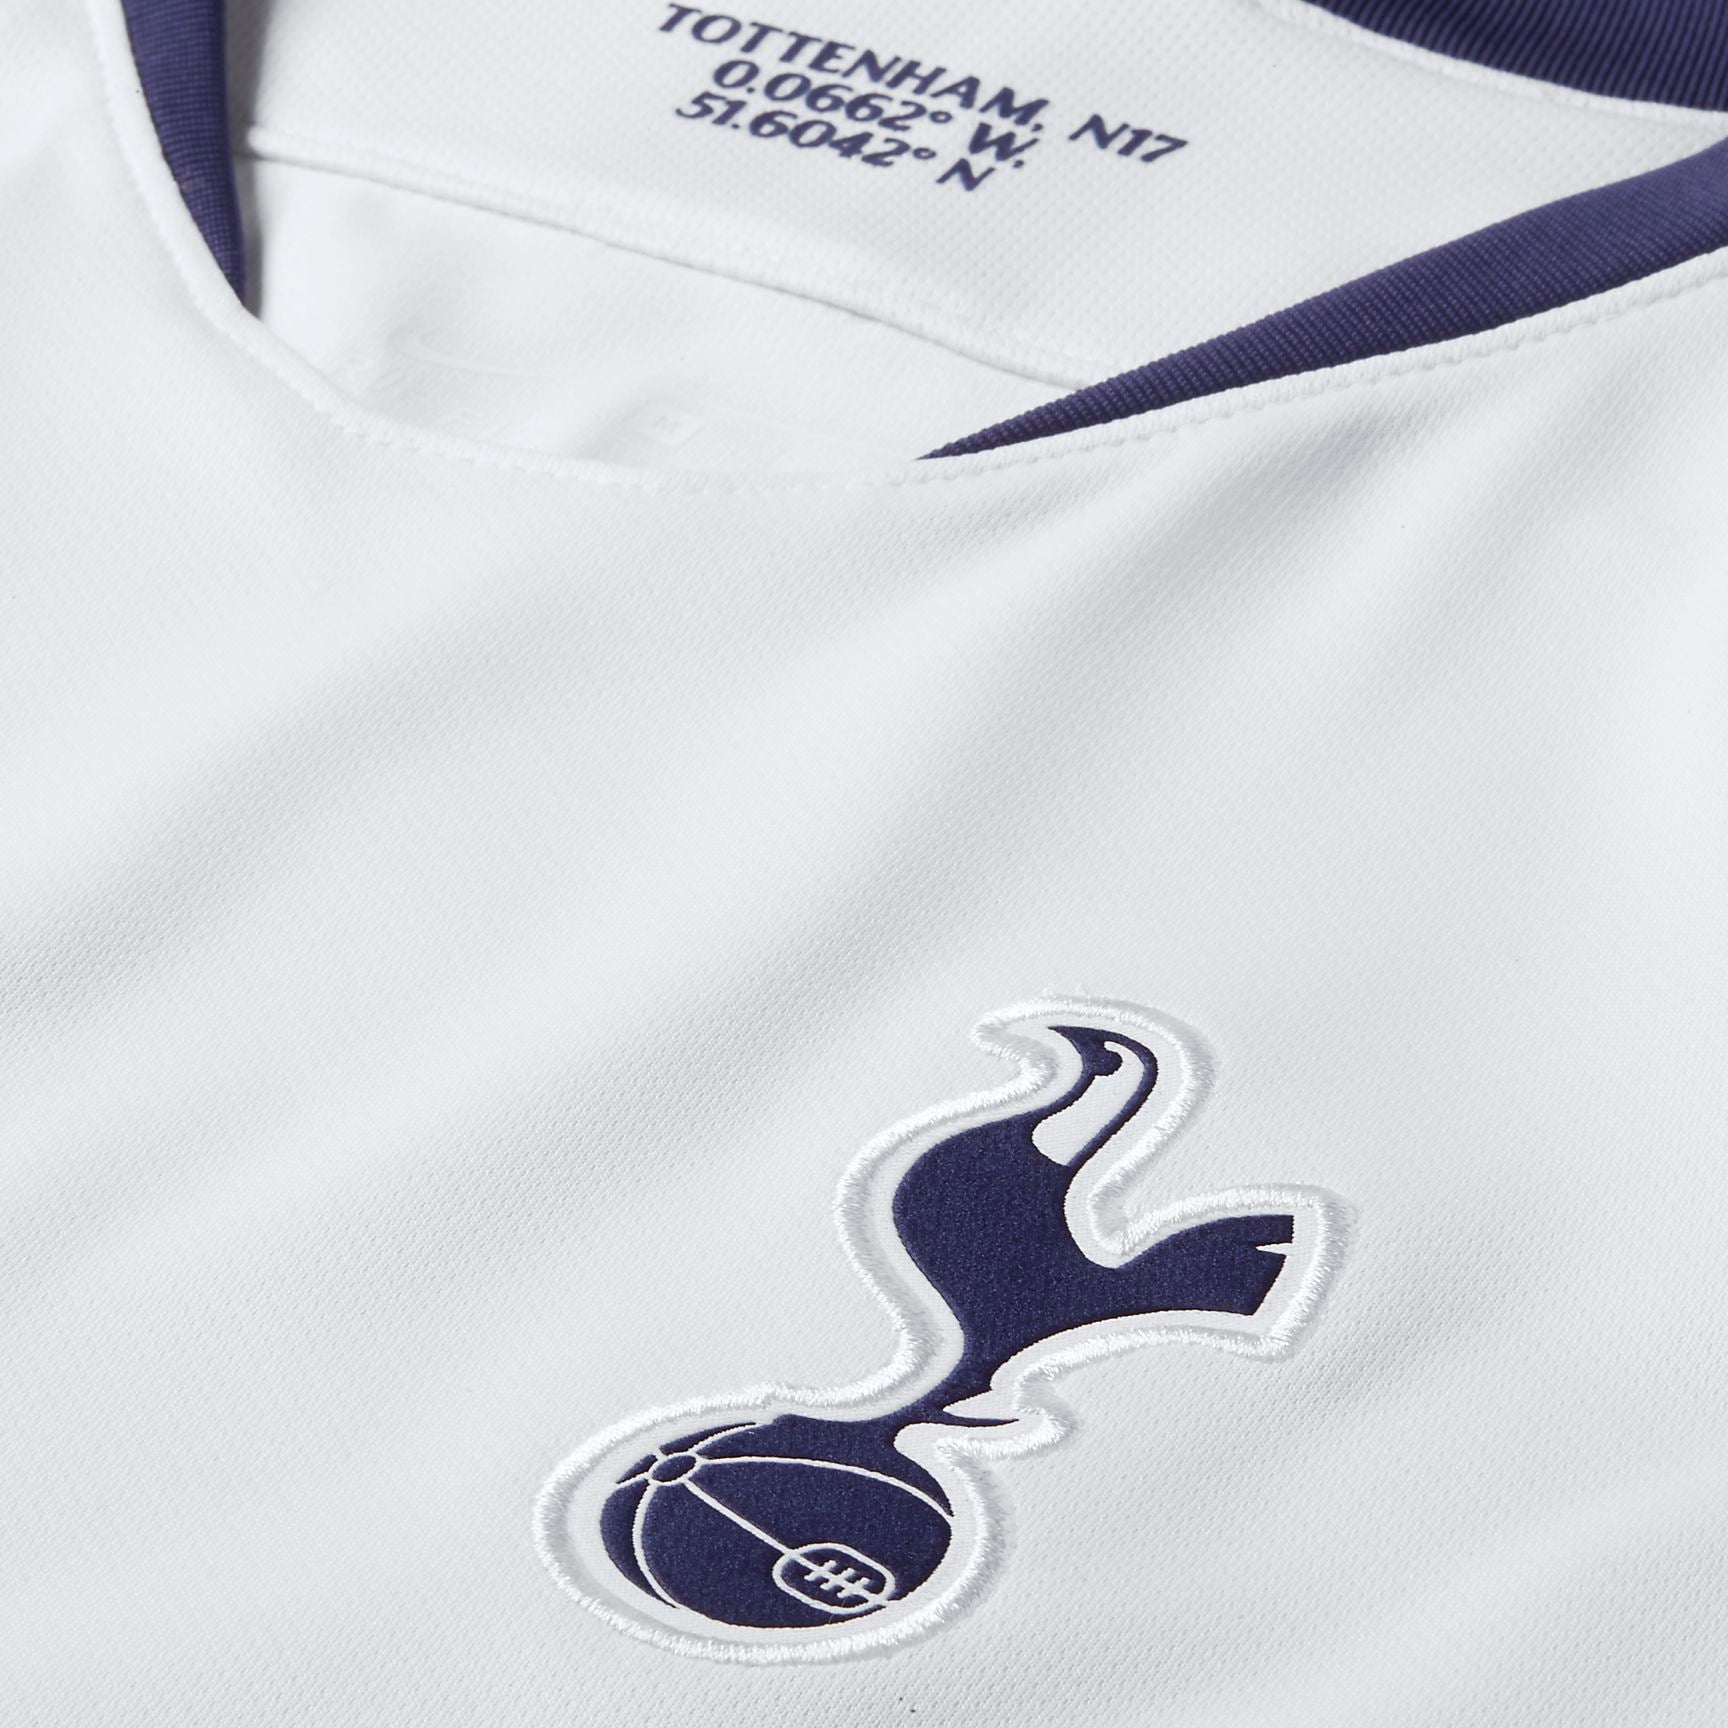 Tottenham Hotspur goes full N17 with its 2018/19 season Third Kit by Nike!